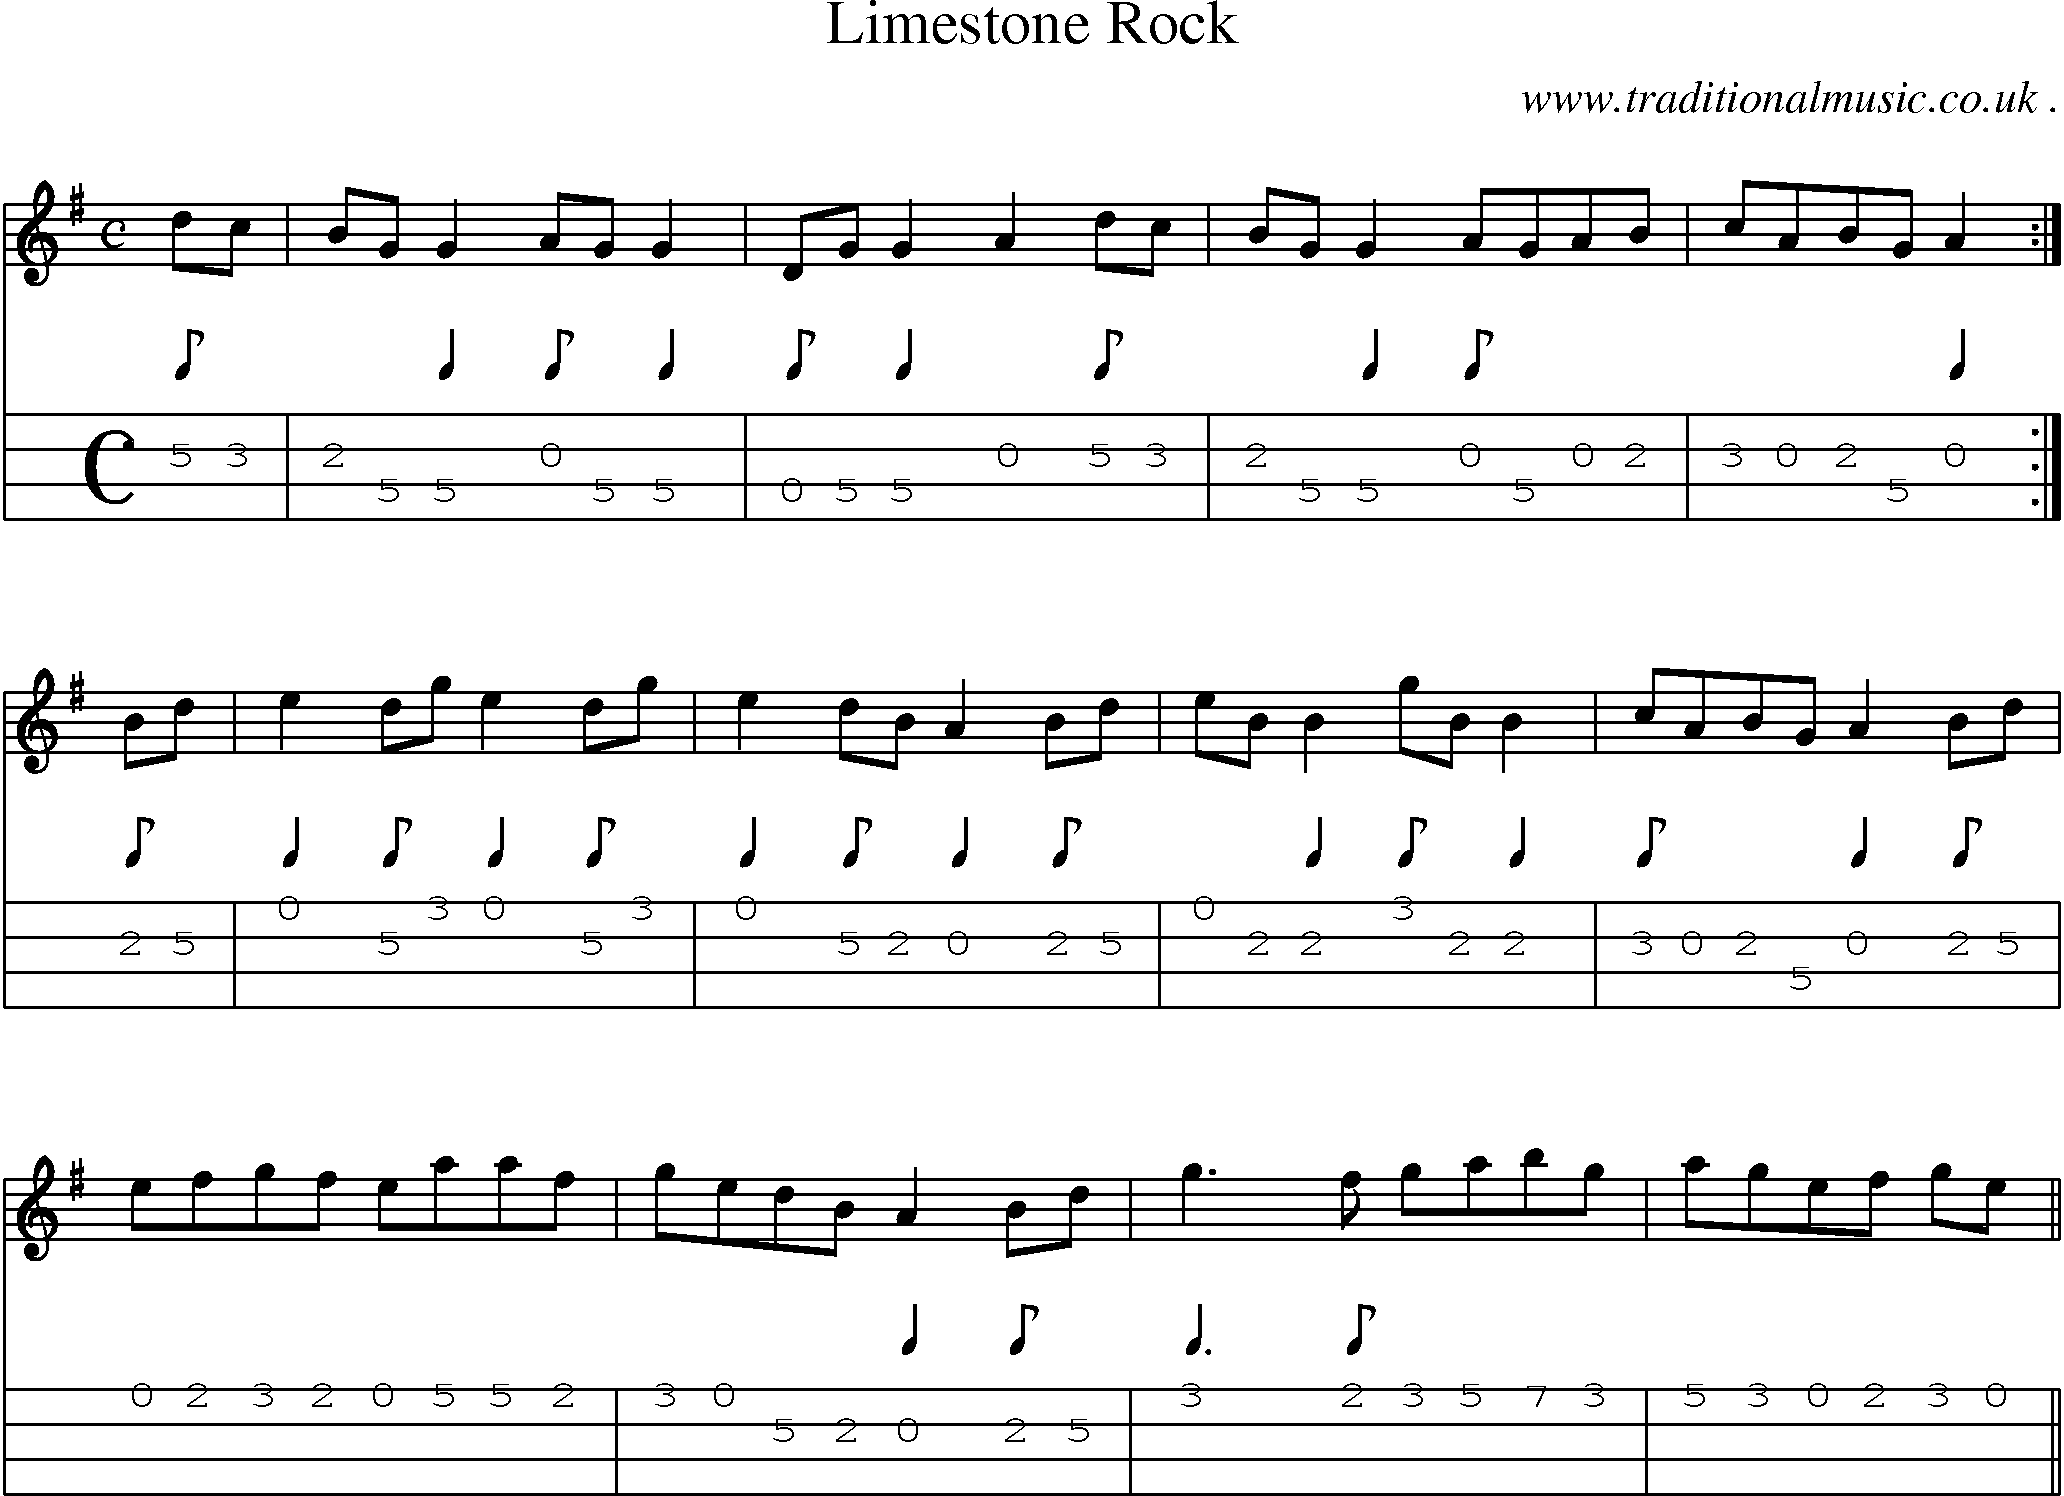 Sheet-Music and Mandolin Tabs for Limestone Rock